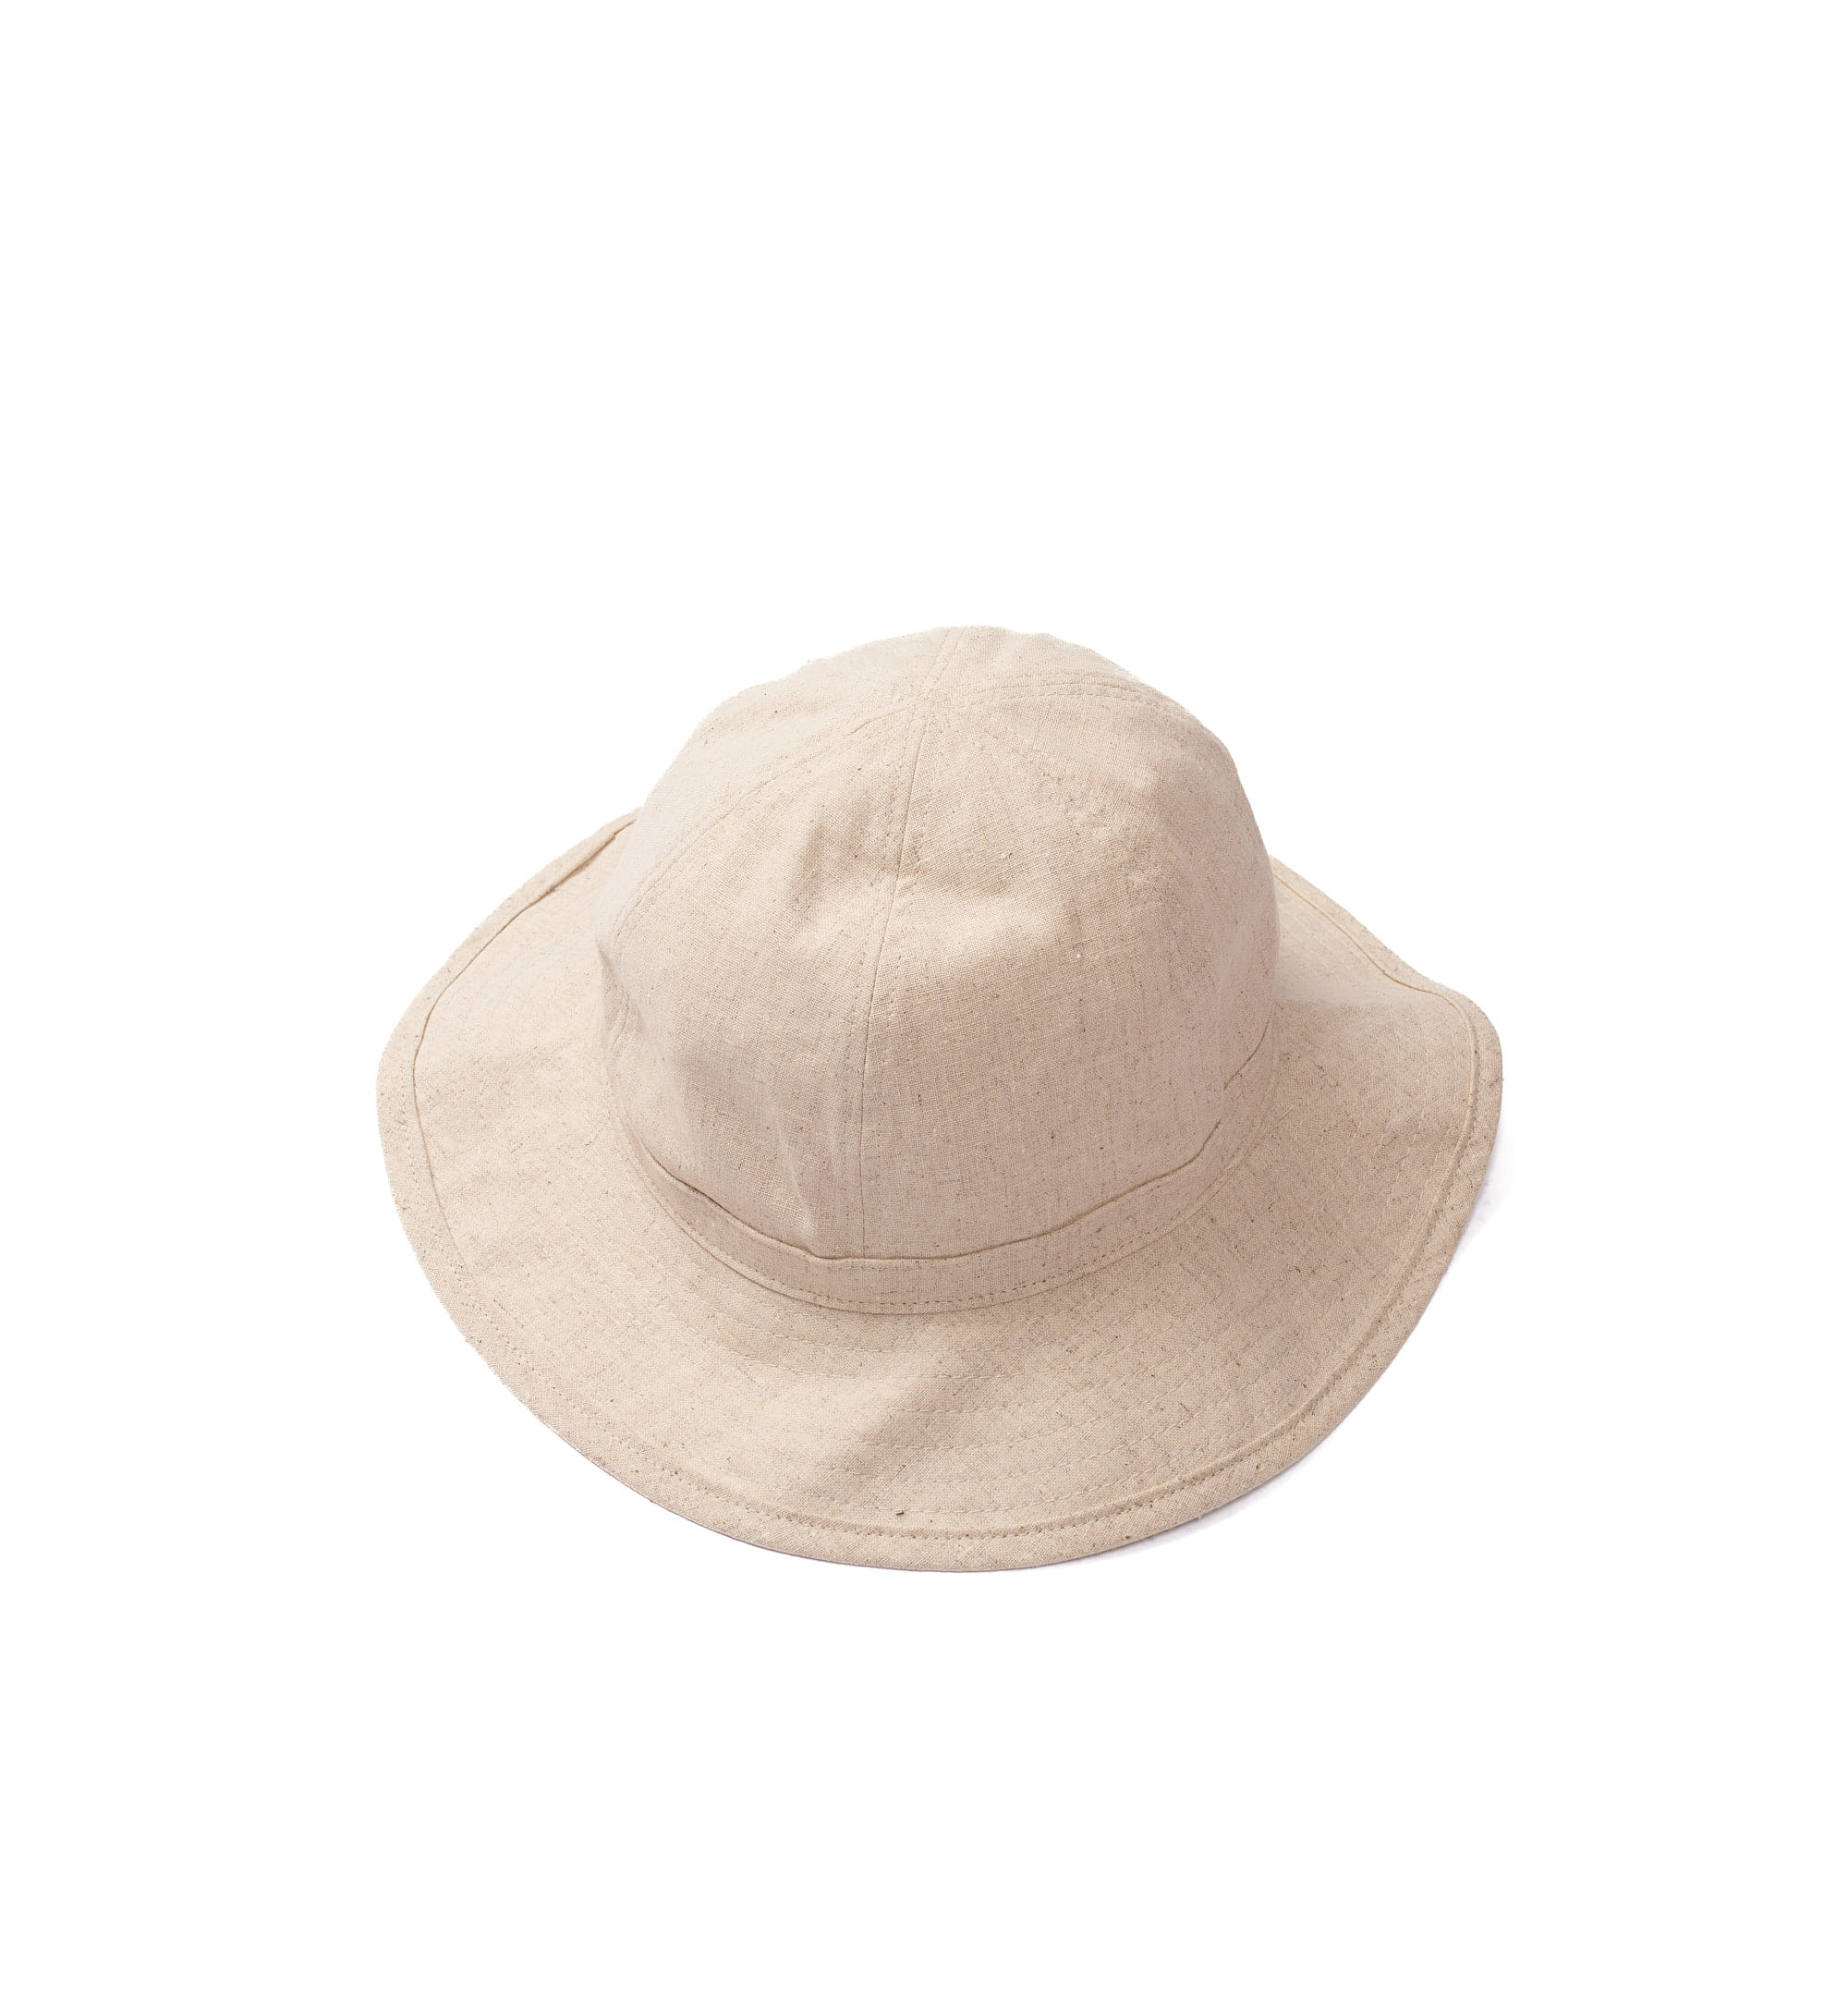 Tackle Hat Cotton/Linen Natural